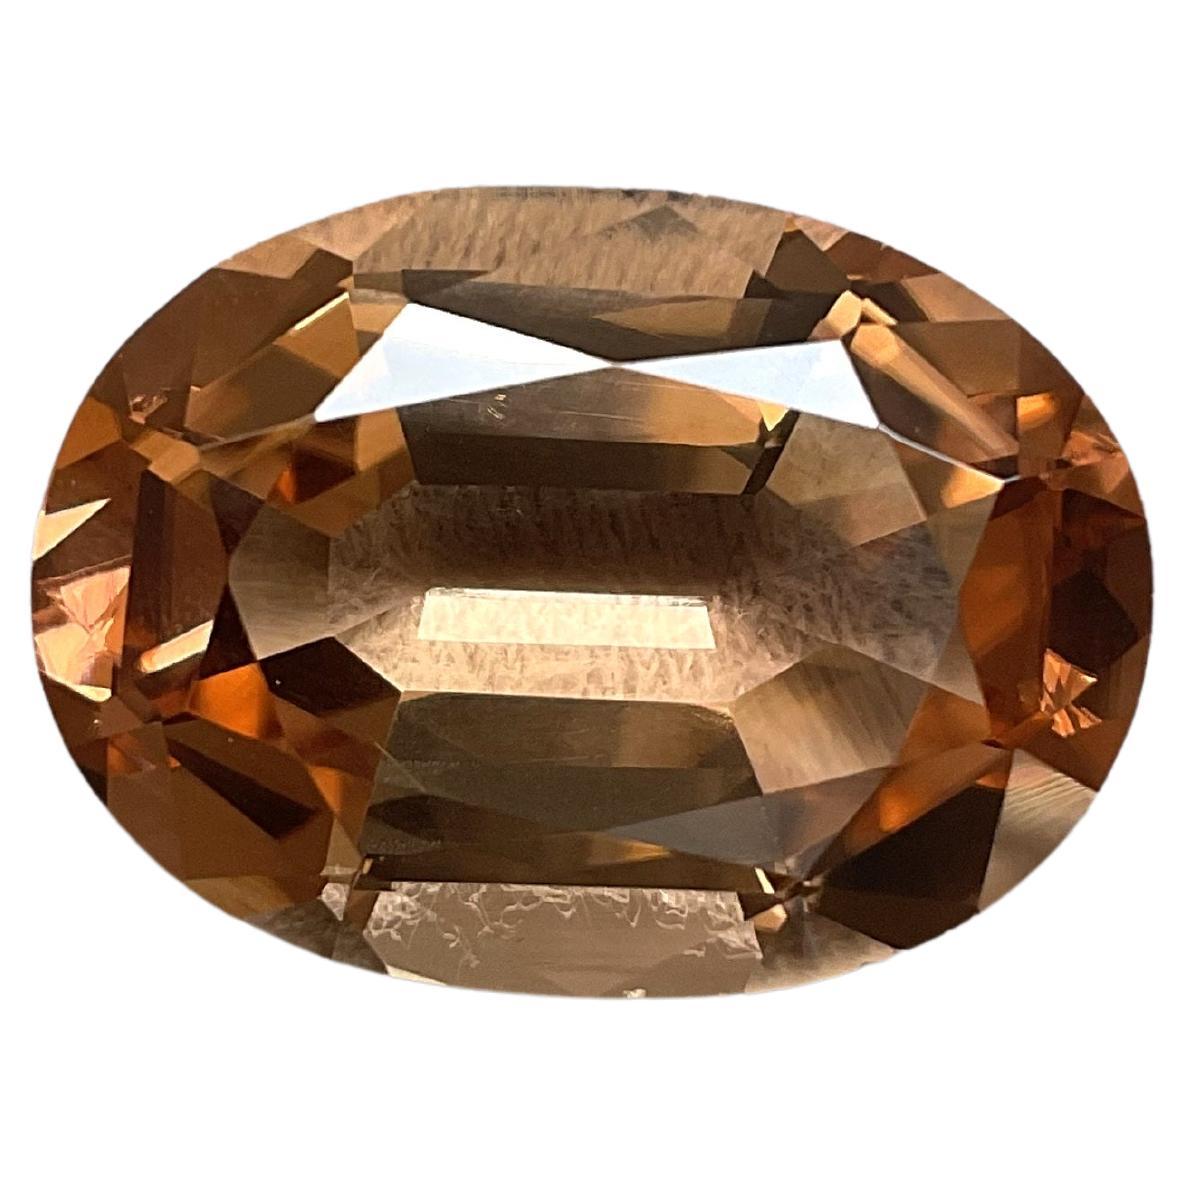 33.37 Carats Top Quality Tourmaline Oval Cut Stone Fine Jewelry Natural Gemstone

Gemstone - Tourmaline
Weight - 33.37 Ct
Size -  25x18x11 mm
Shape - Oval Cut Stone